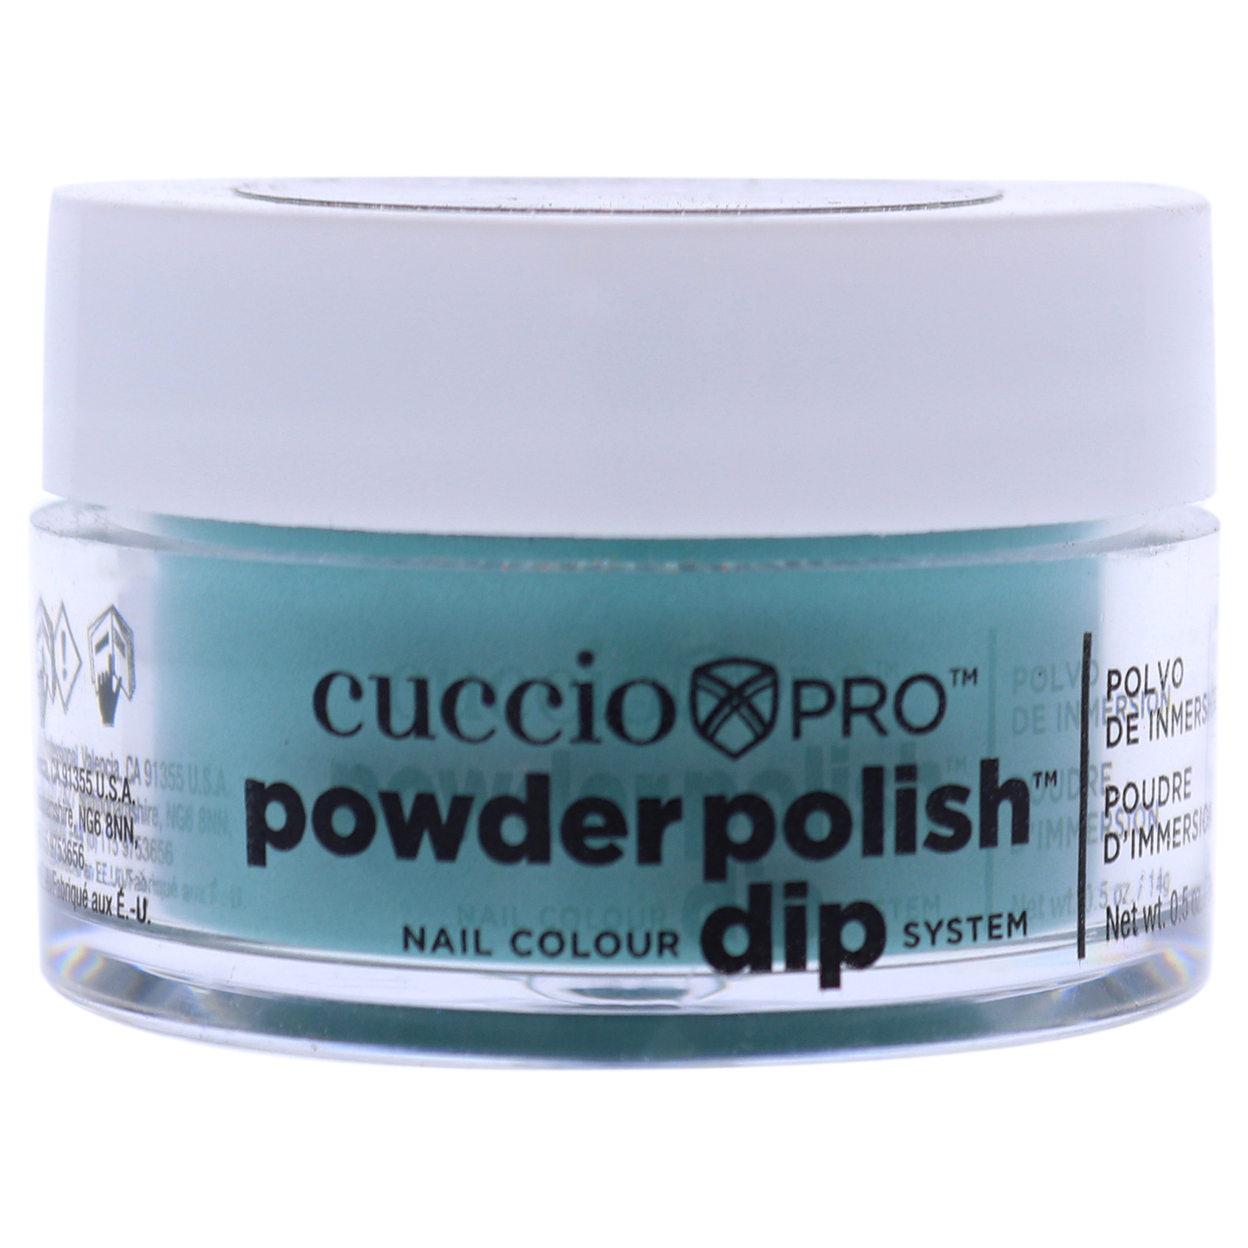 Cuccio Colour Pro Powder Polish Nail Colour Dip System - Jade Green Nail Powder 0.5 Oz